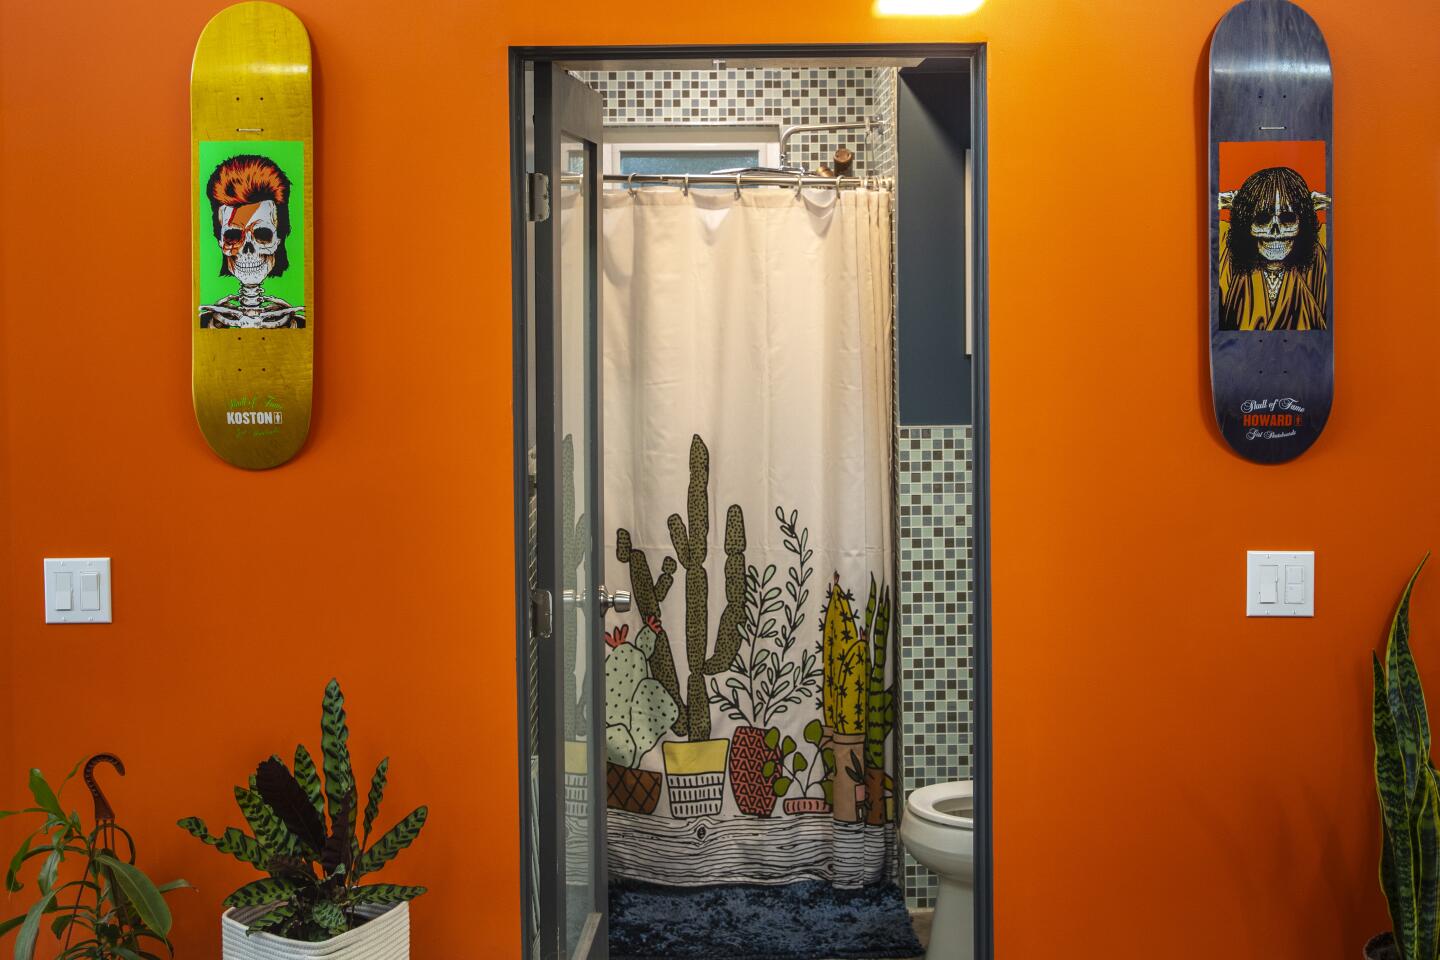 The bathroom door is set in a bright orange wall.